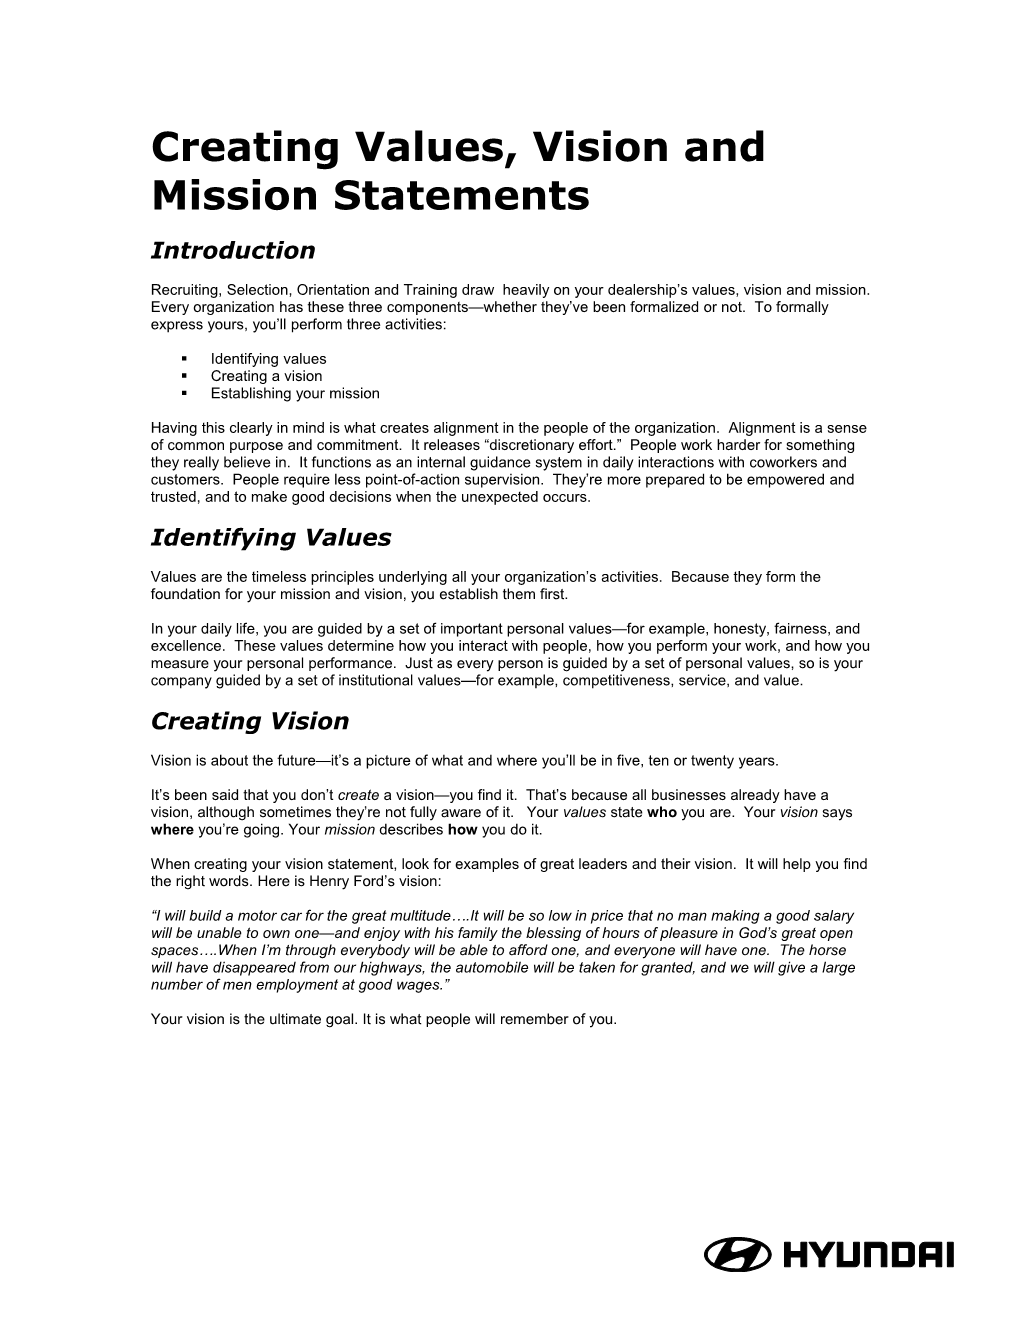 Establishing Values, Mission, and Vision